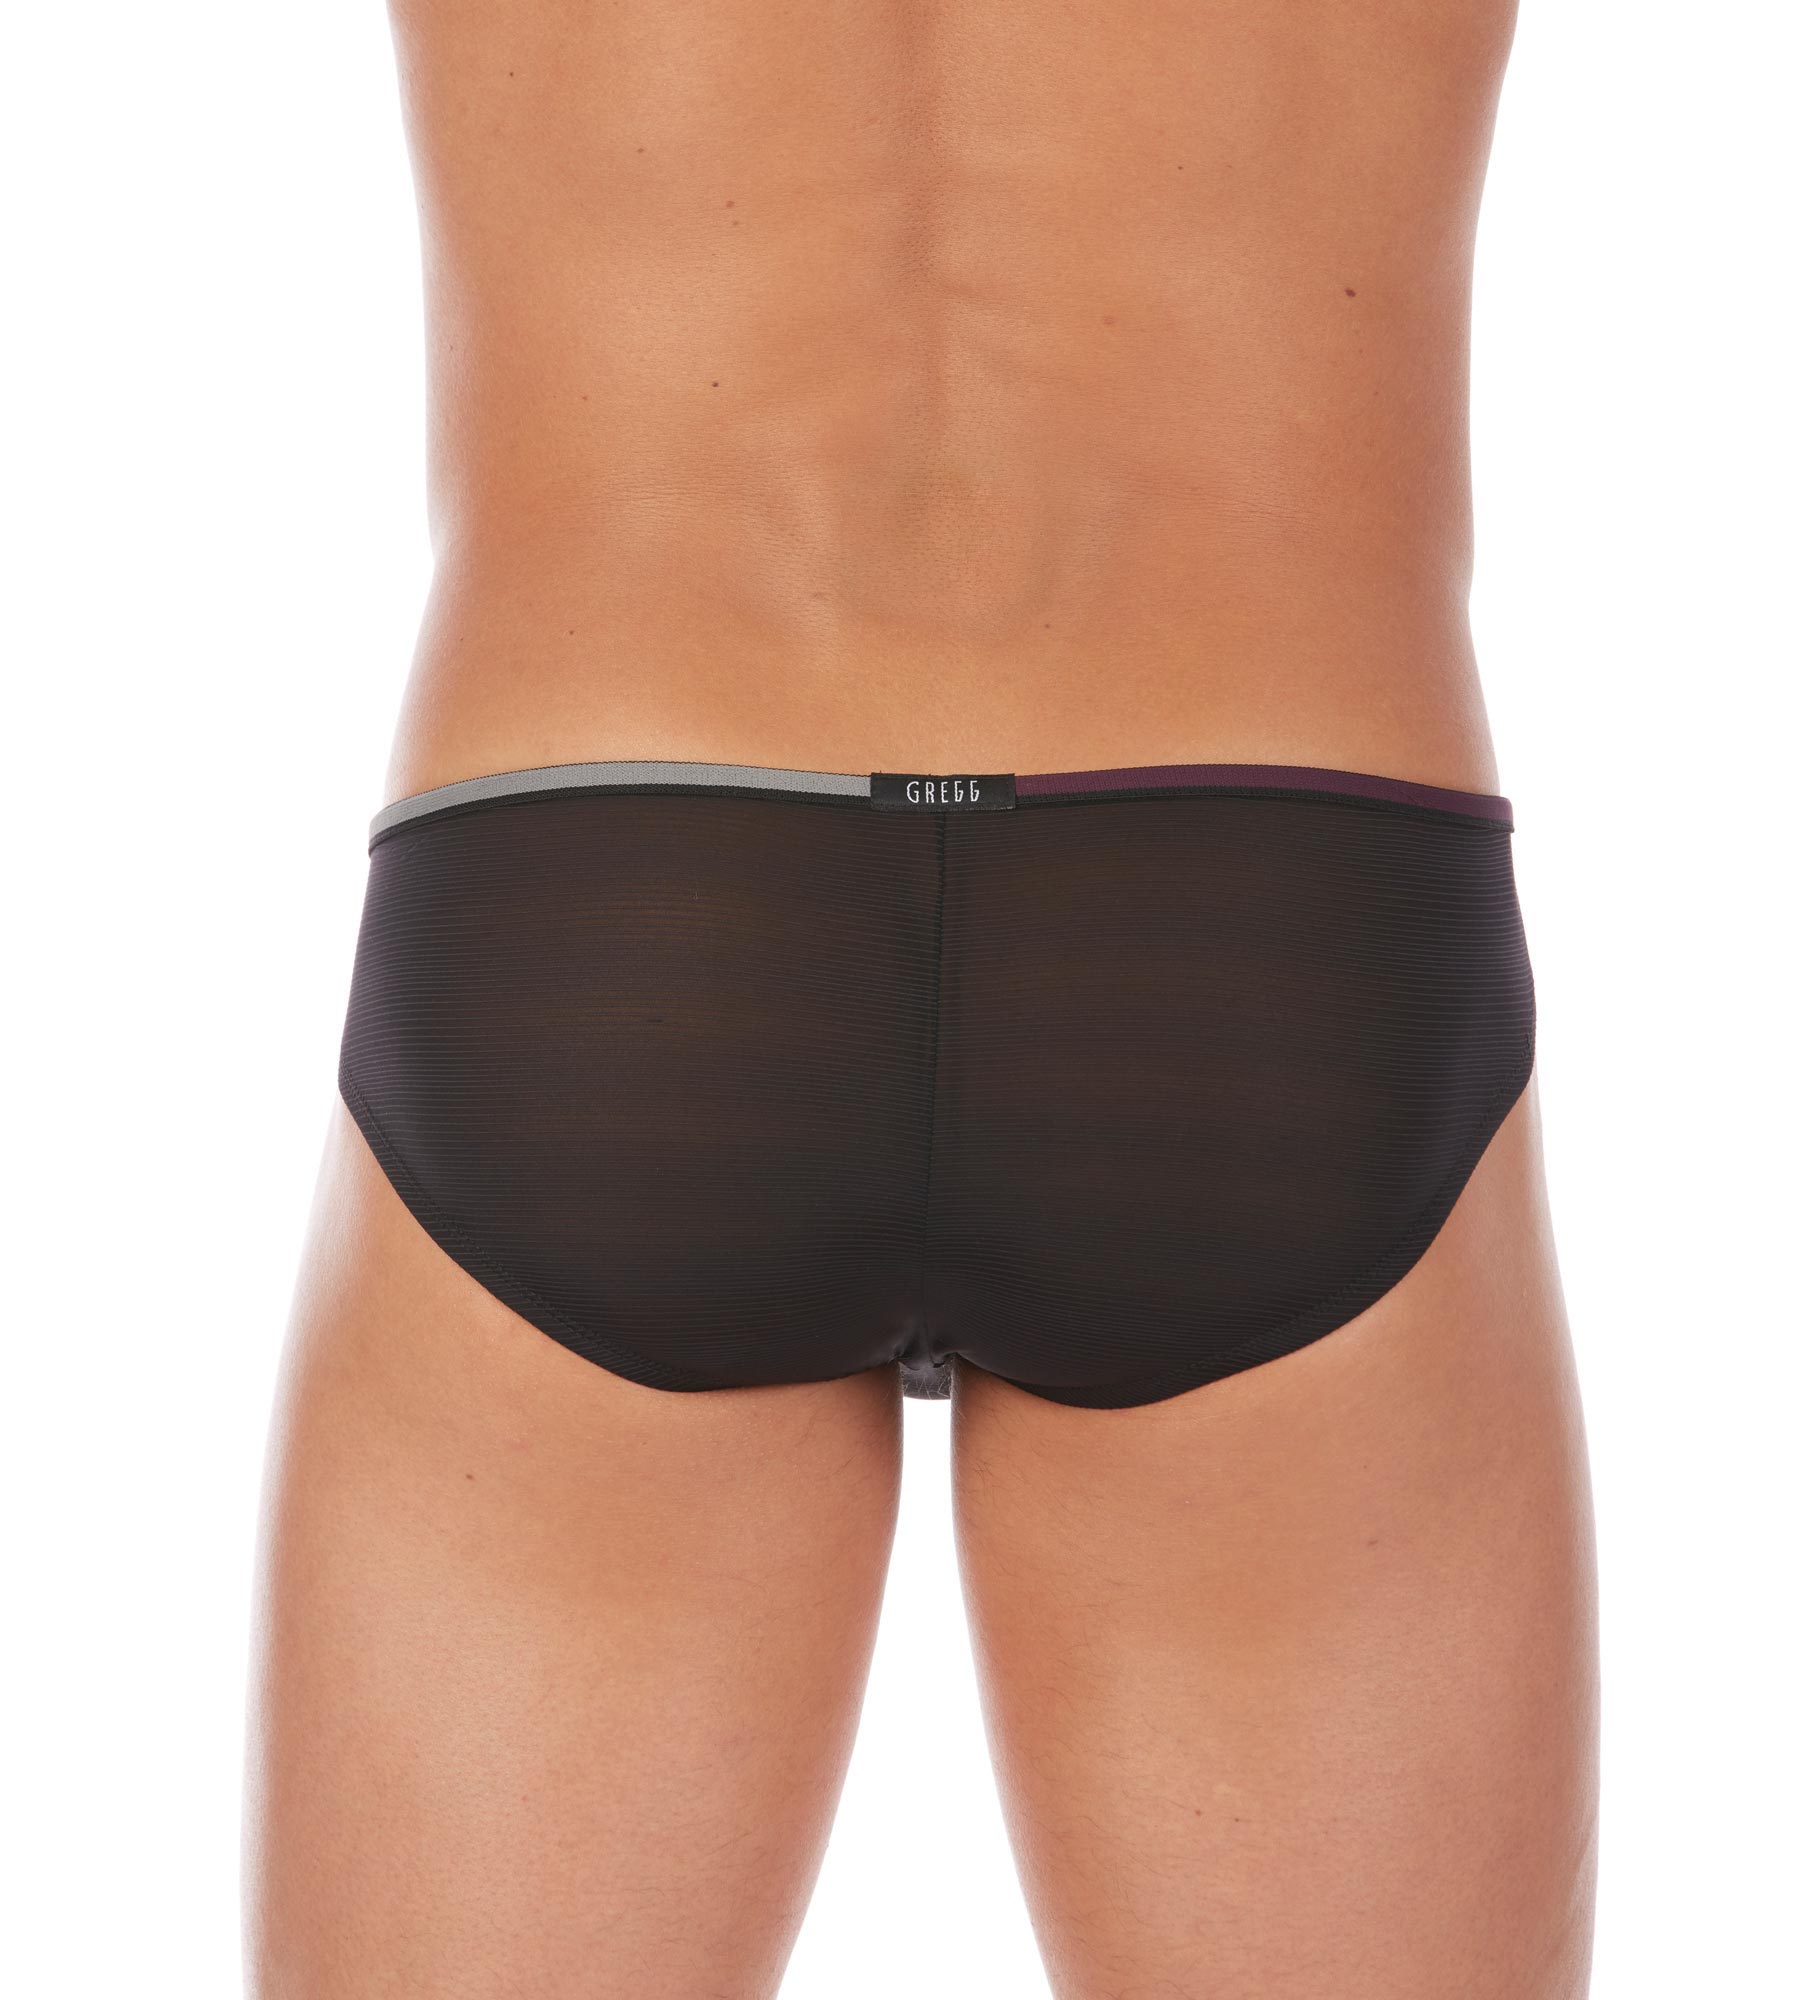 Review – Gregg Homme For Play Briefs – Underwear News Briefs